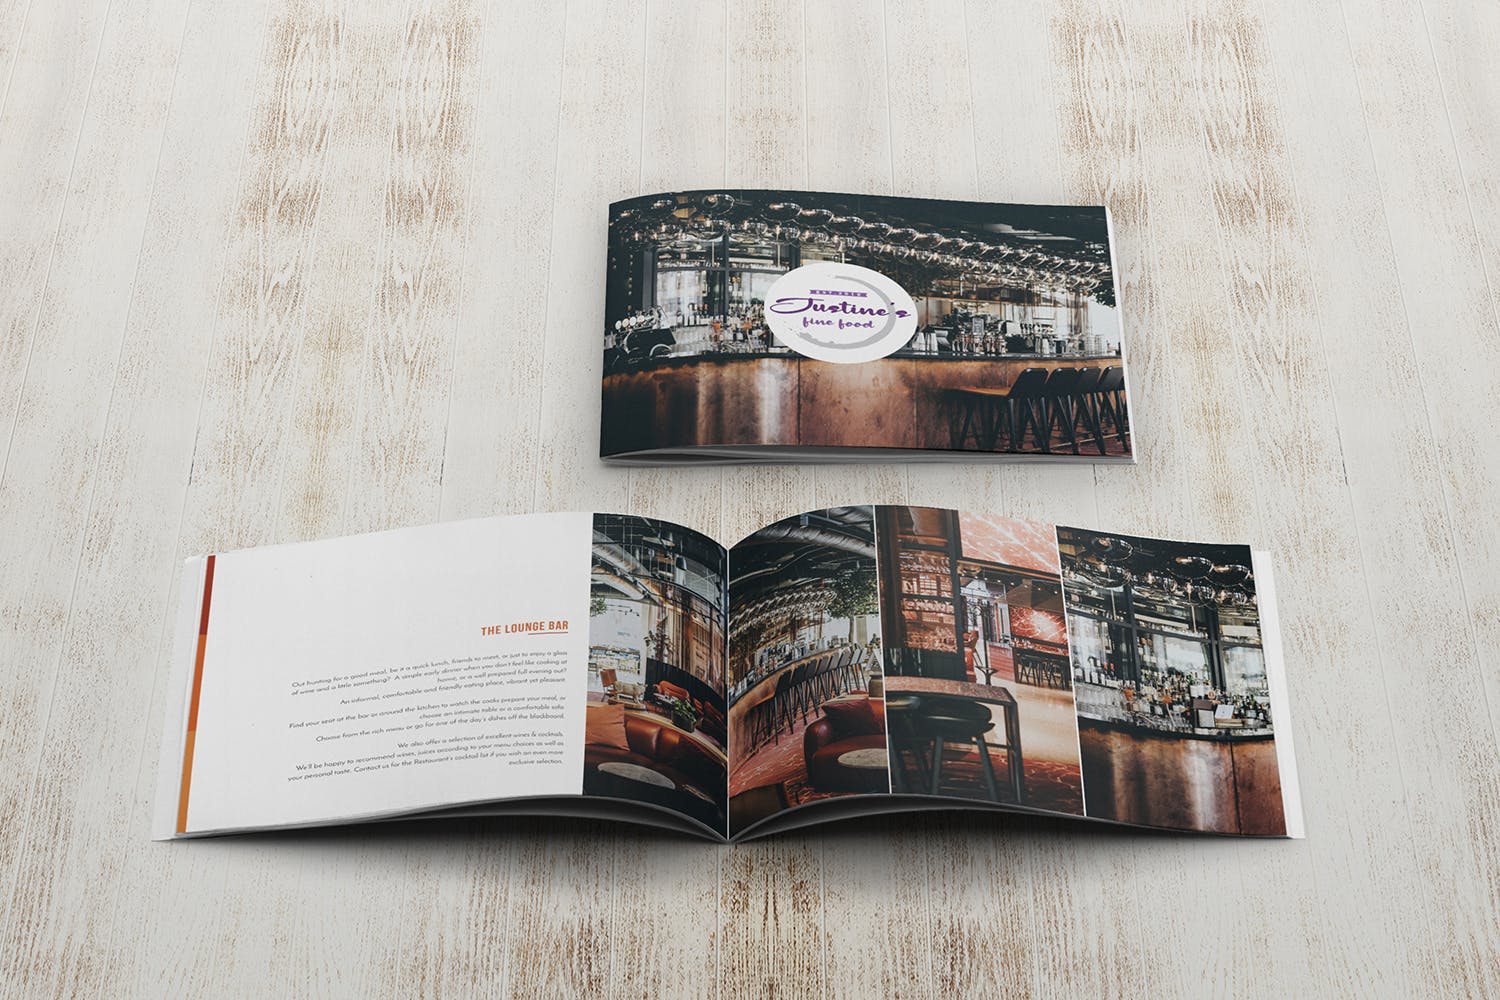 企业画册产品手册封面&内页版式设计正视图样机素材库精选 Cover & Open Landscape Brochure Mockup Front View插图(2)